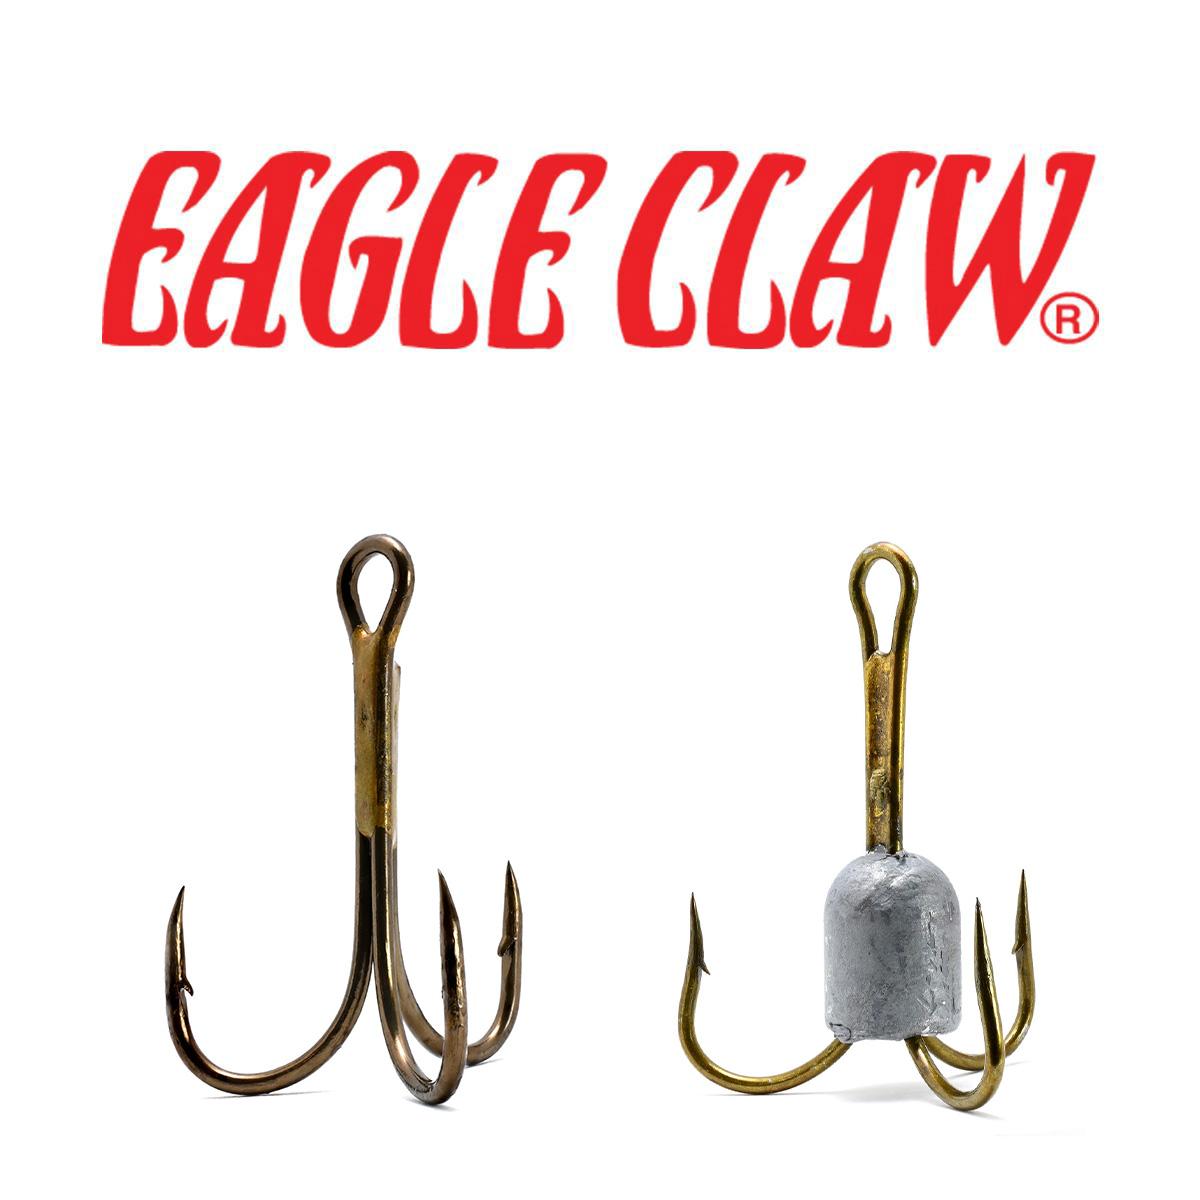 Eagle Claw Treble Hooks